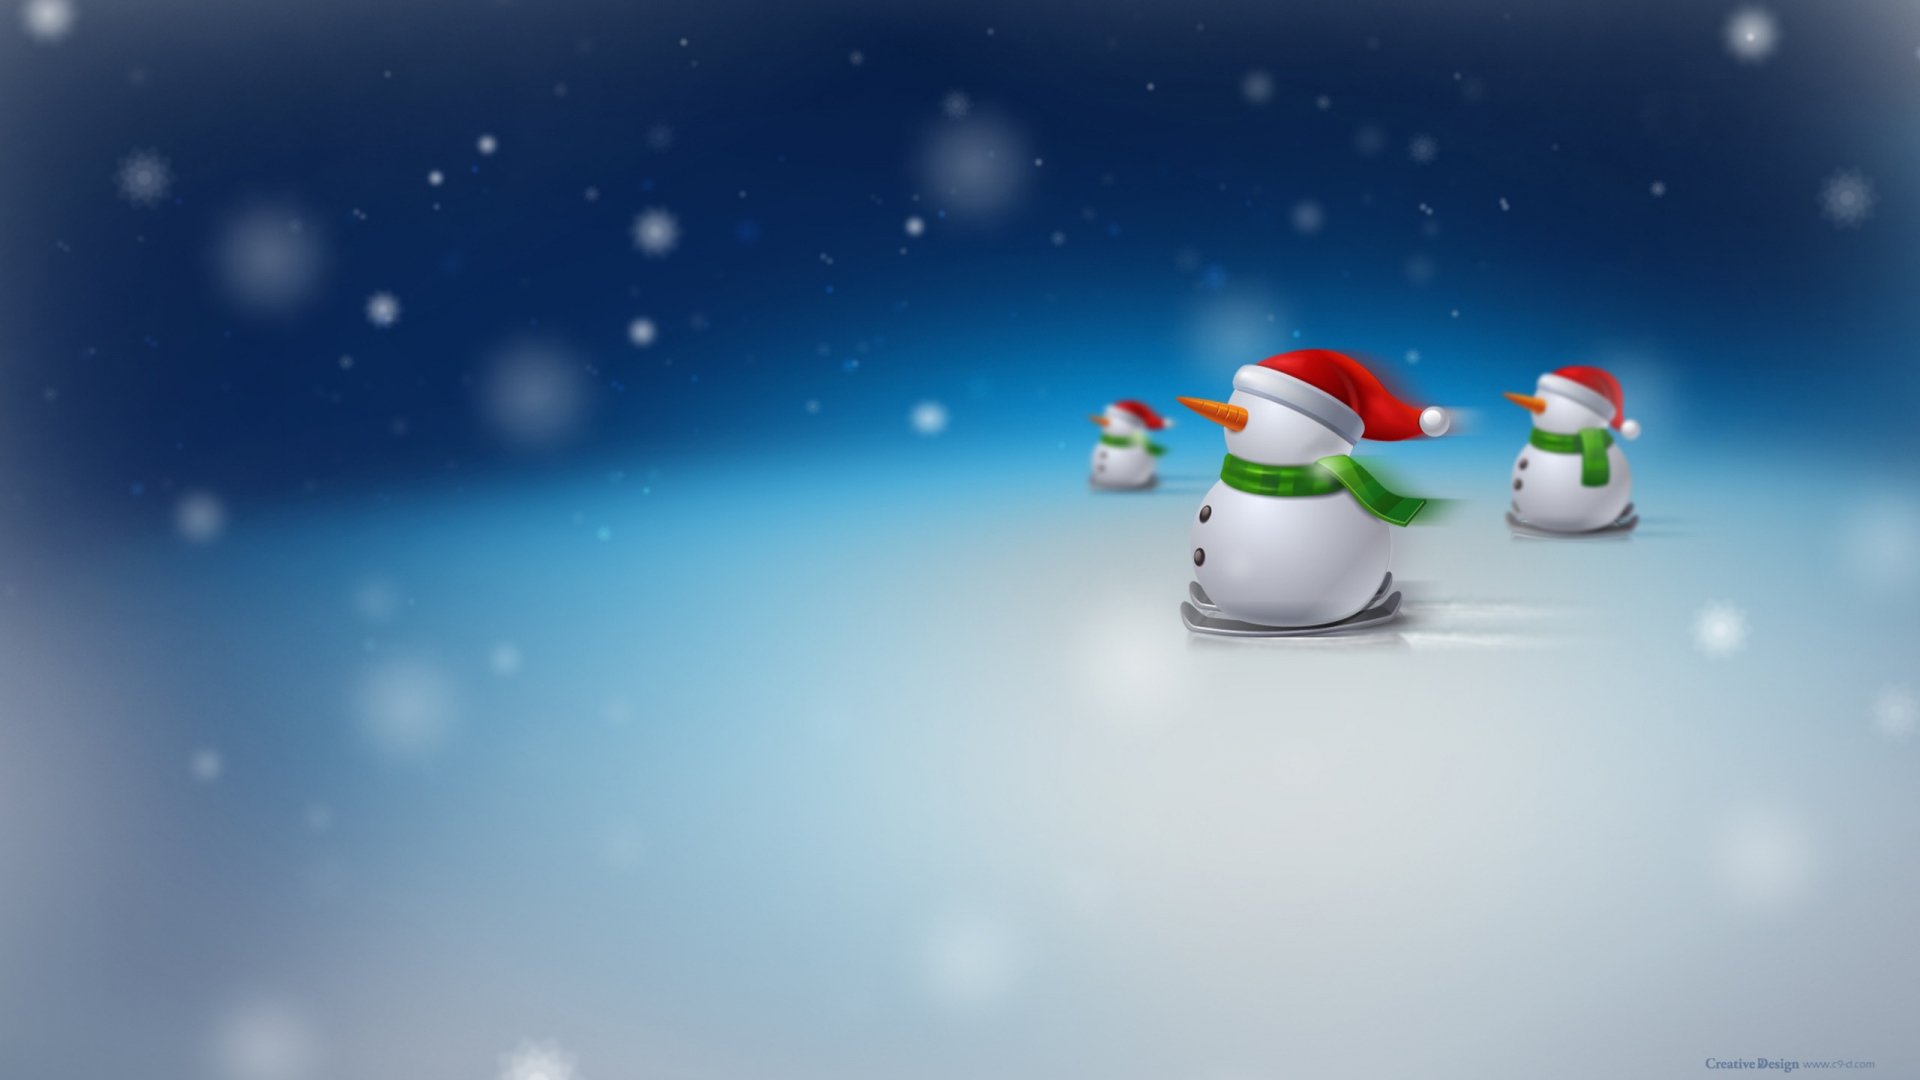 Snowman for 1920 x 1080 HDTV 1080p resolution